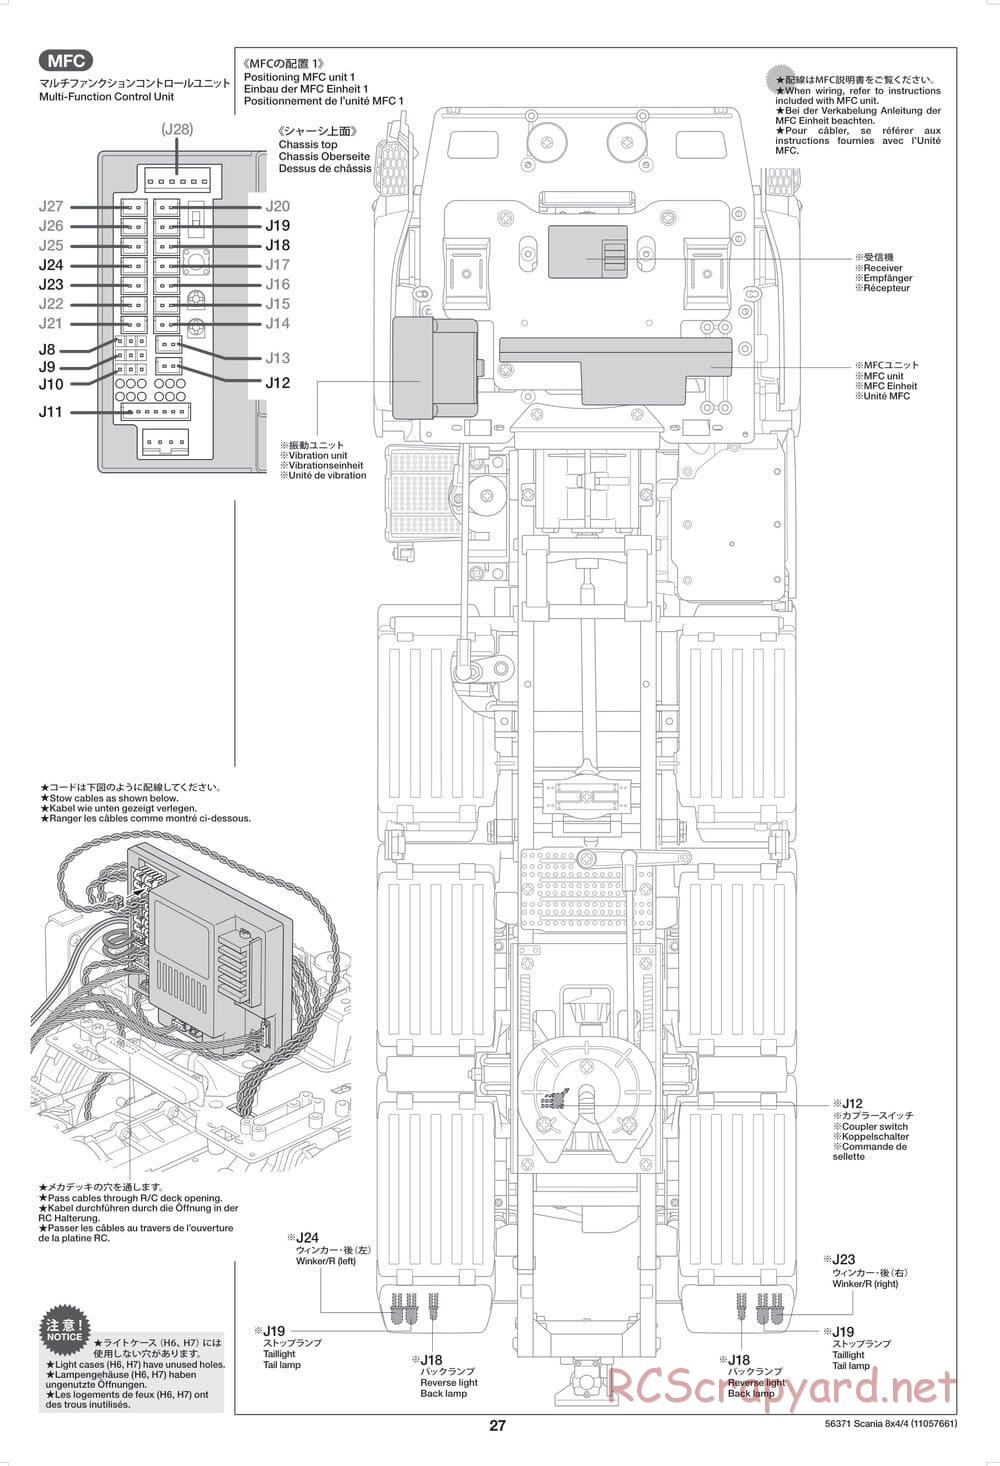 Tamiya - Scania 770 S 8x4/4 Chassis - Manual - Page 27